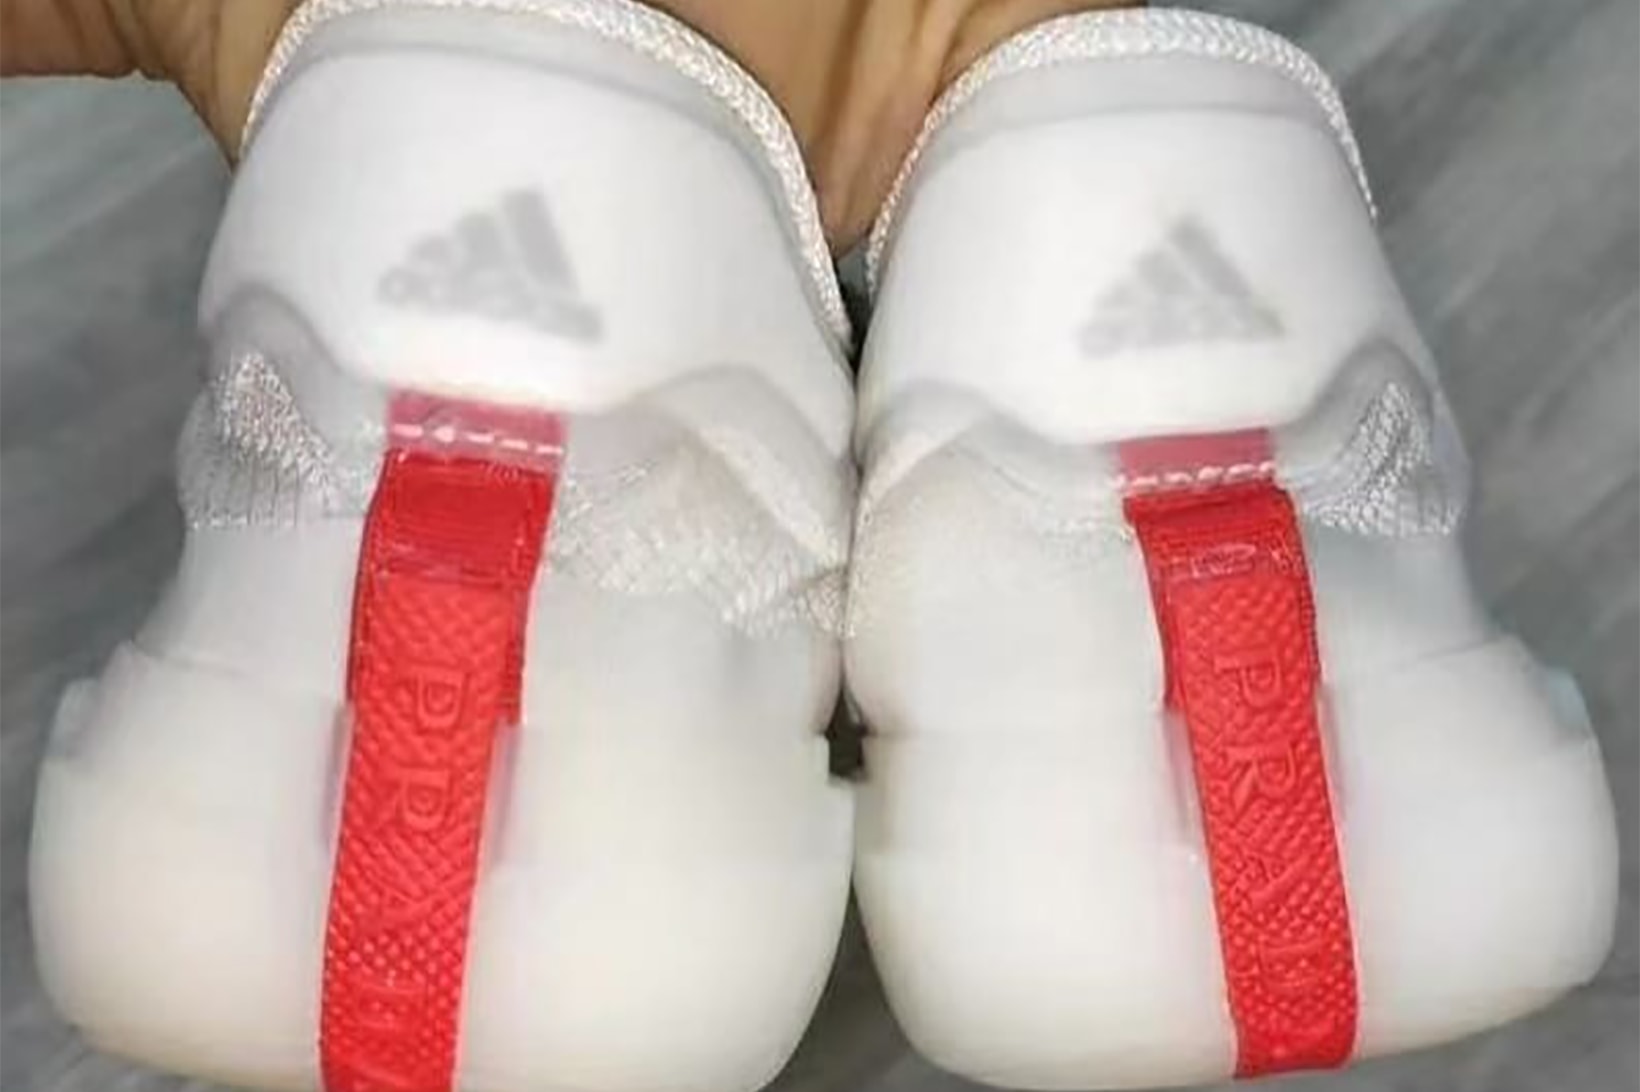 adidas prada collaboration americas cup sneakers white red footwear sneakerhead shoes